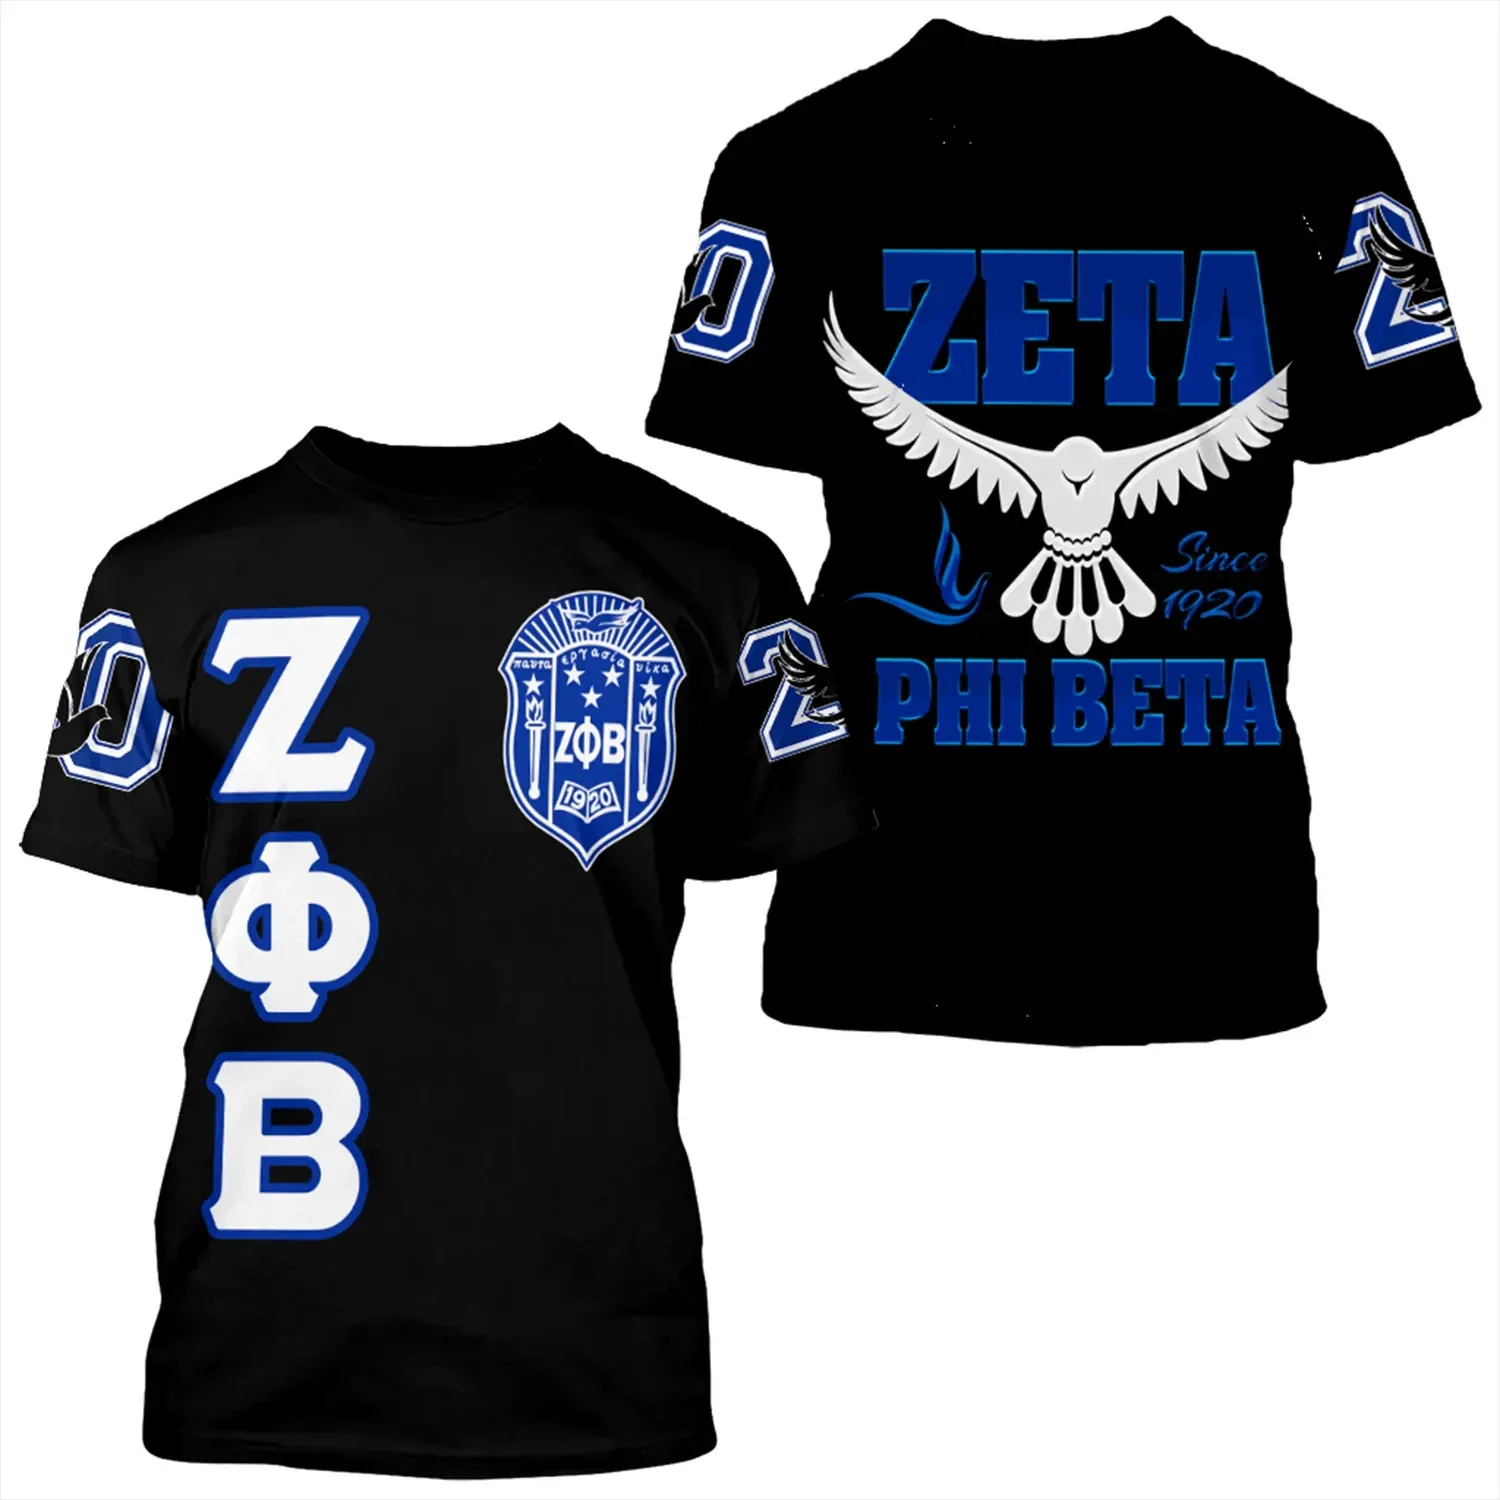 T-shirt – Zeta Phi Beta Letters Tee